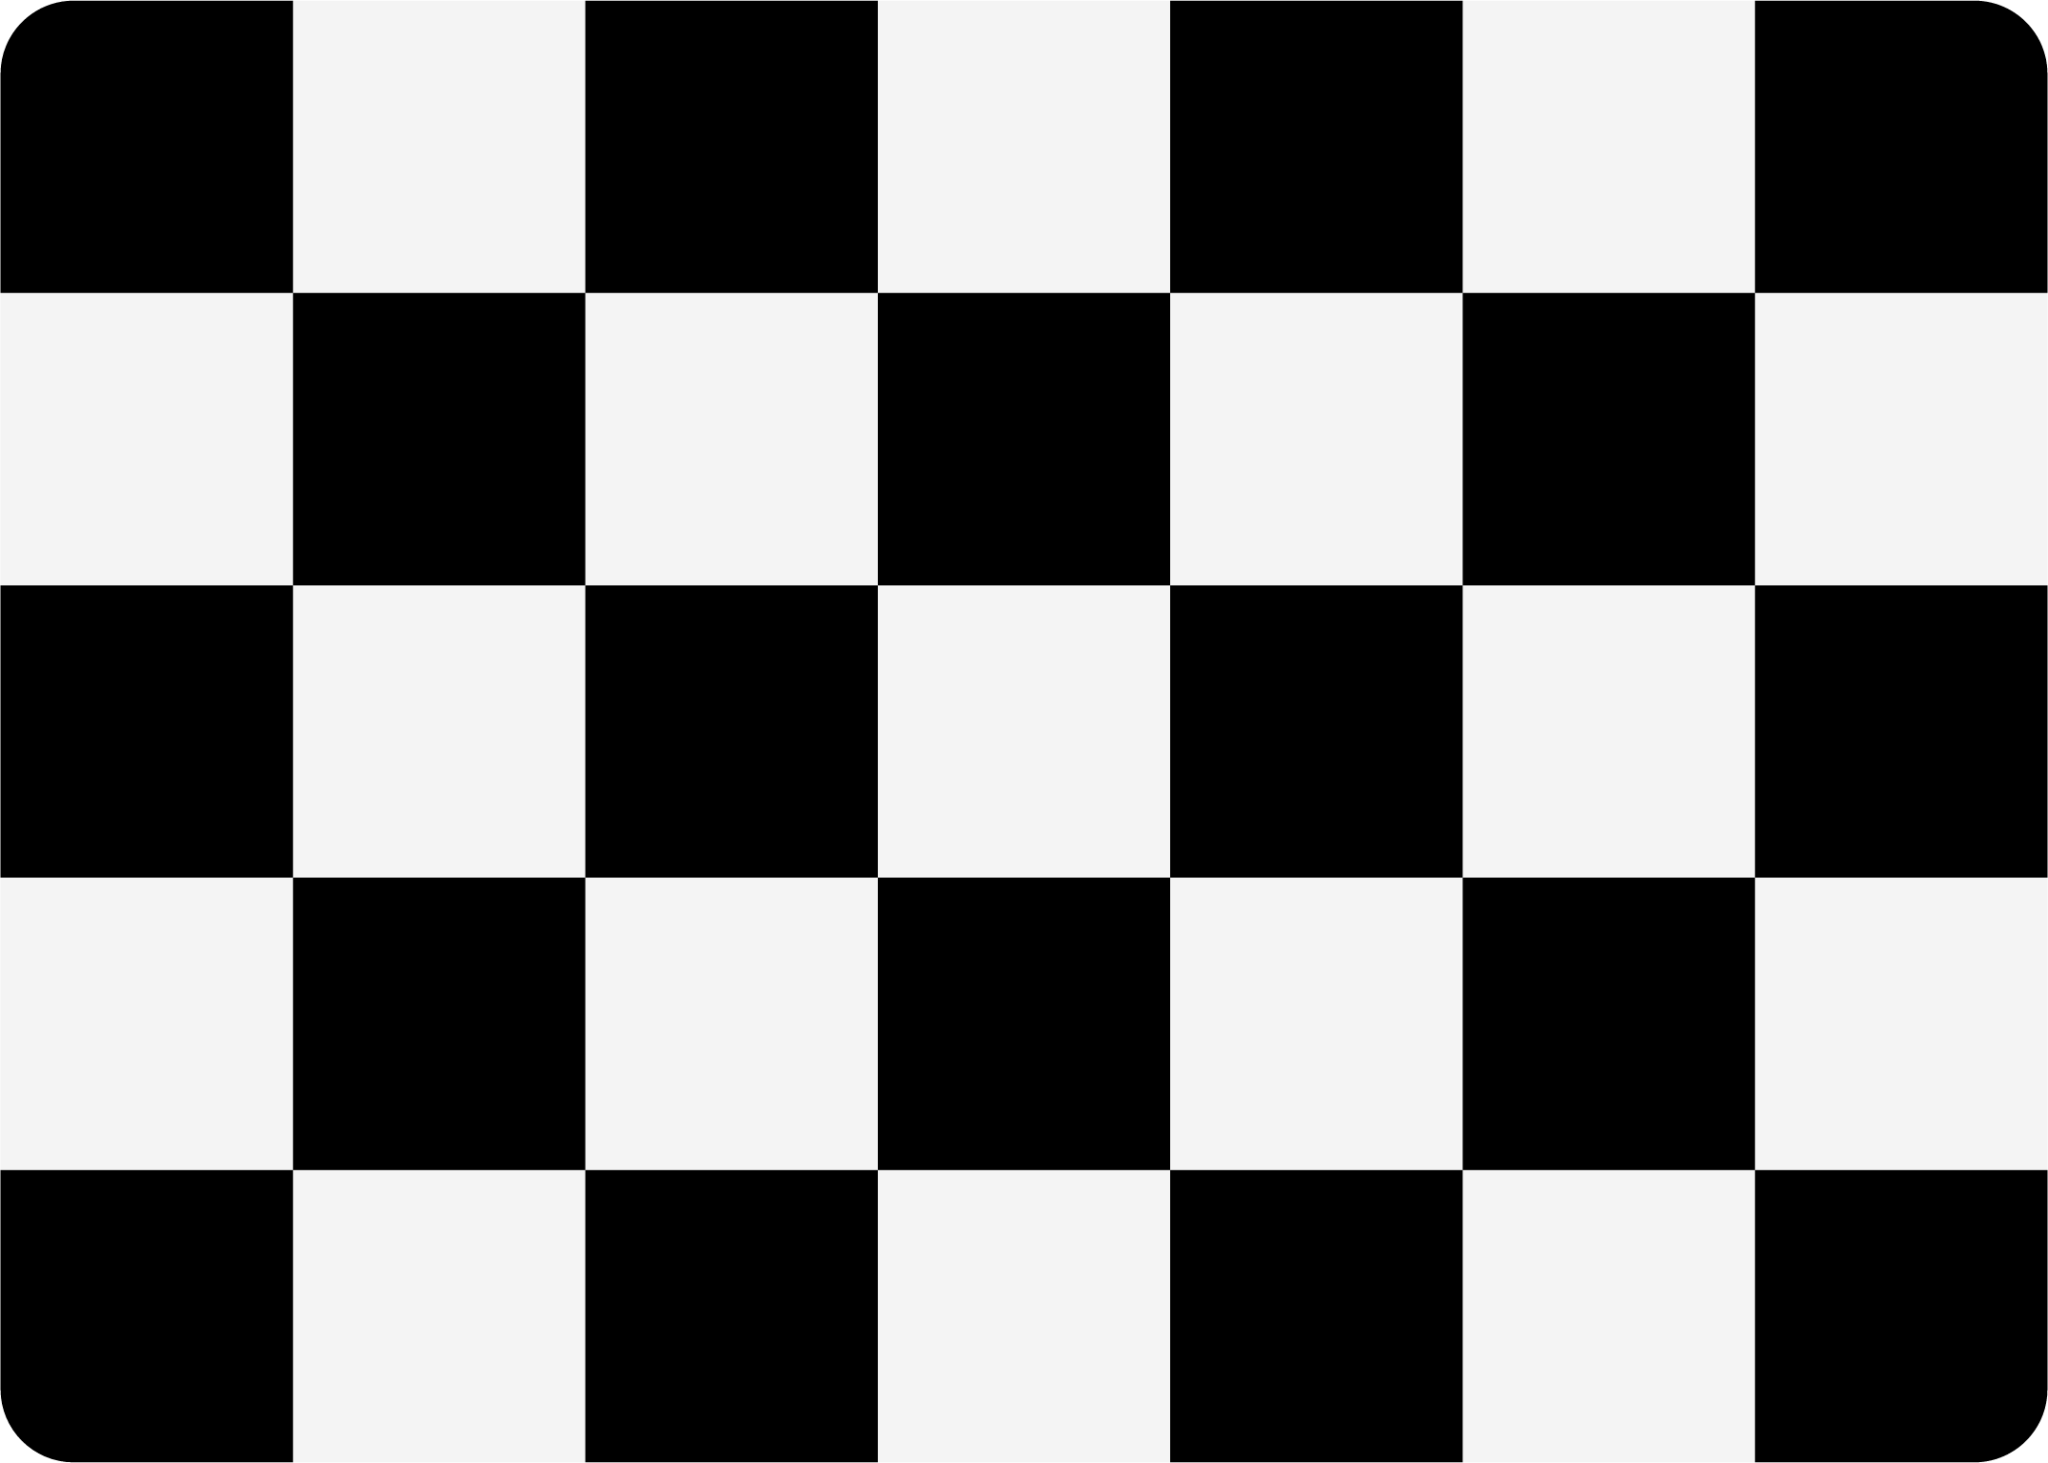 chequered flag emoji